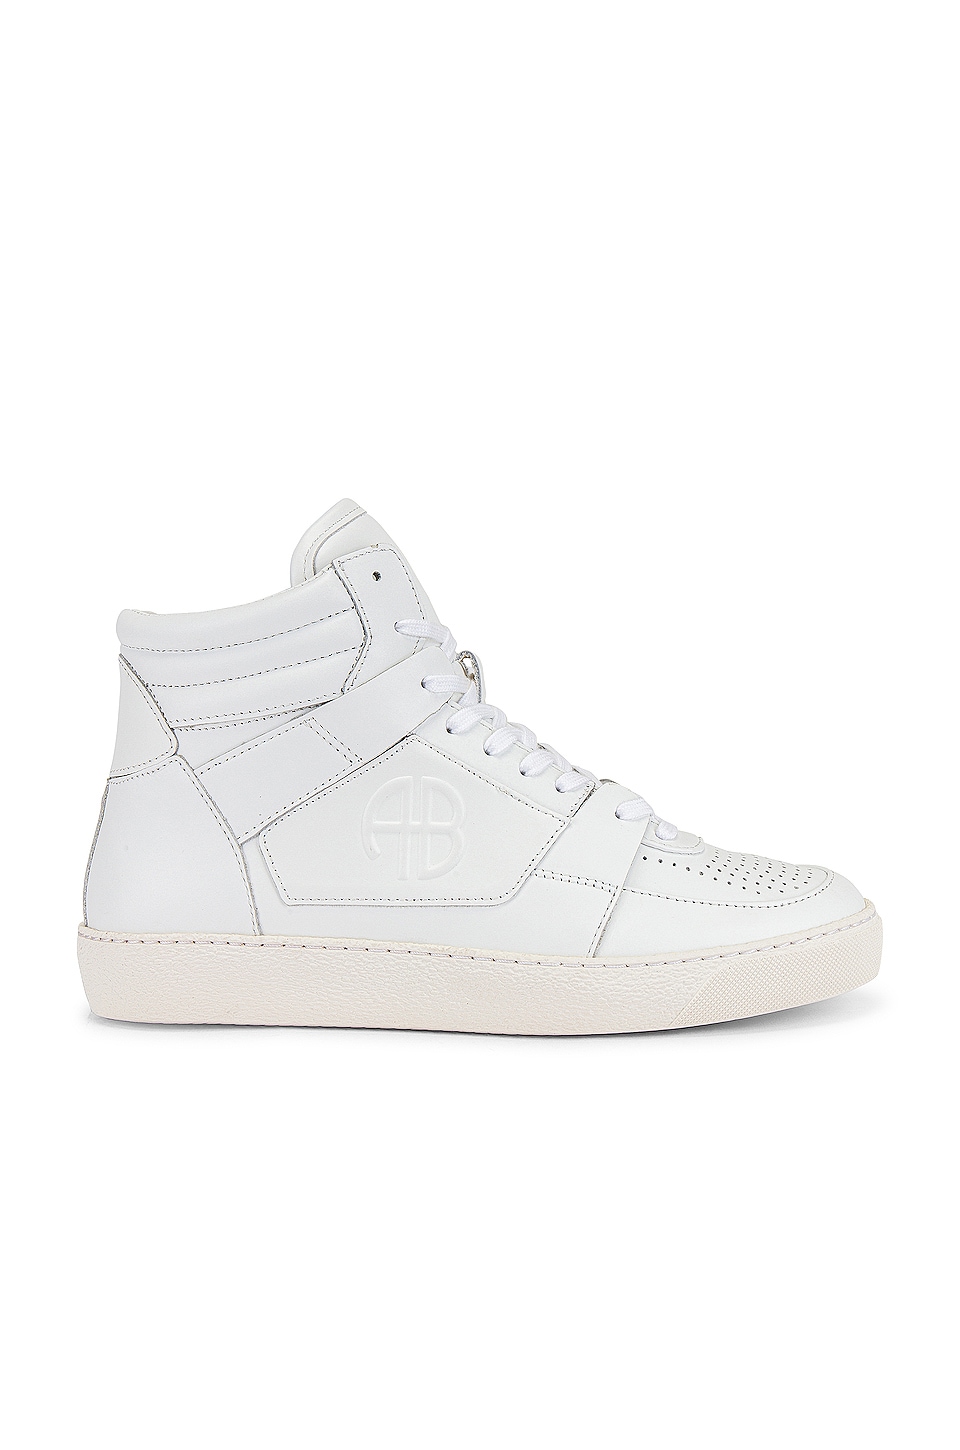 ANINE BING Sport Hayden Sneaker in White | REVOLVE